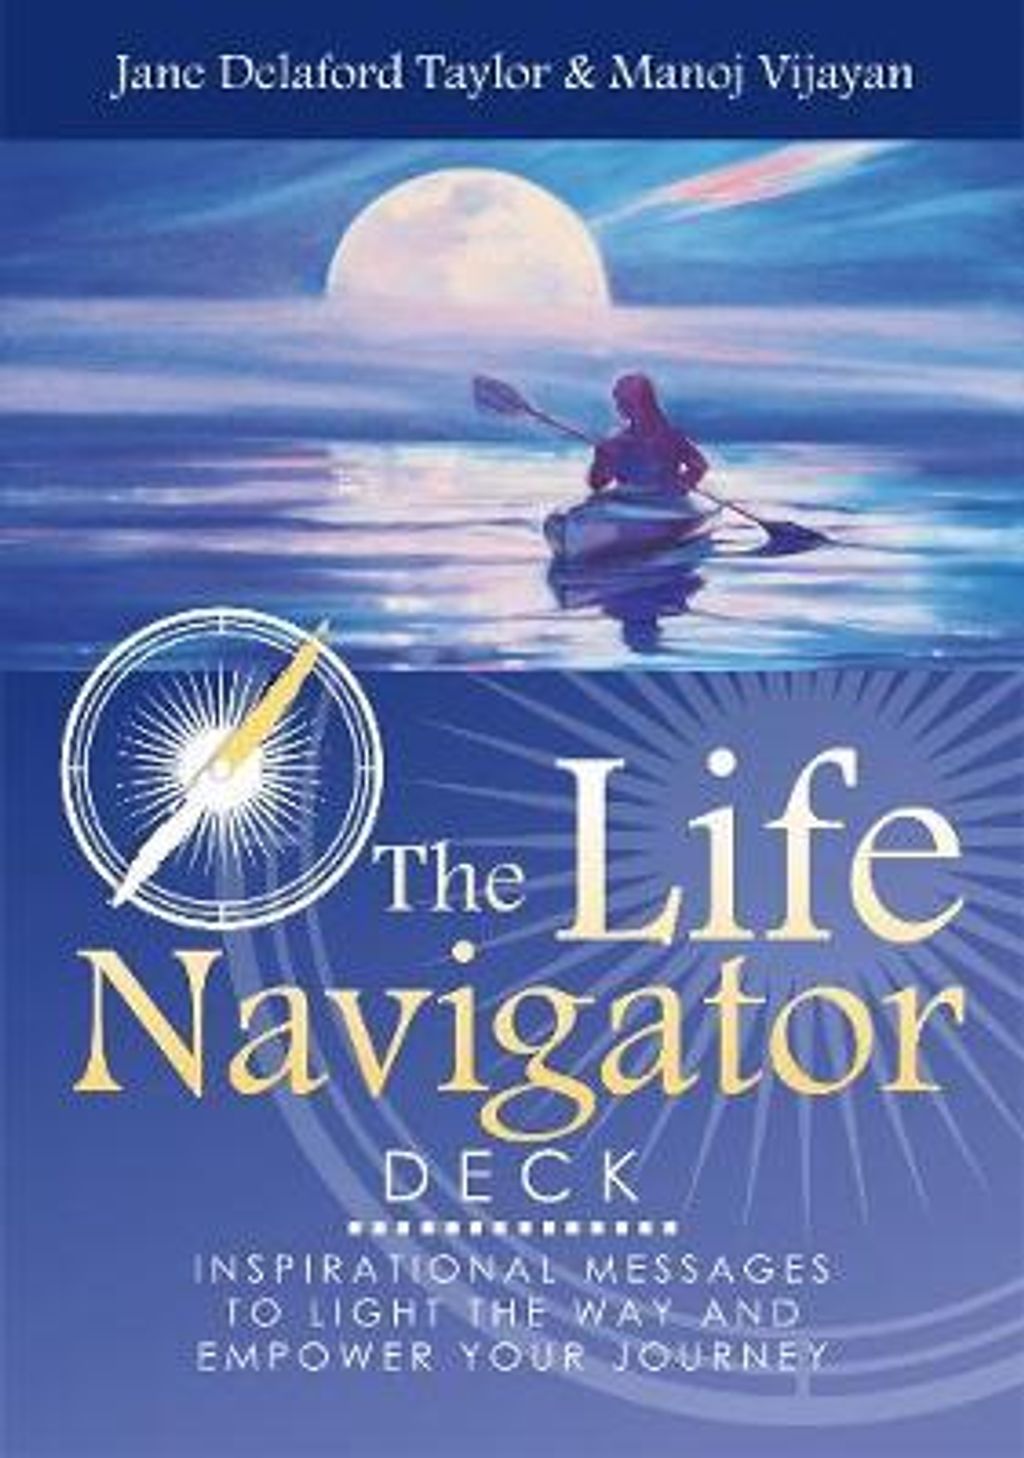 生命領航卡：The Life Navigator Deck.jpg